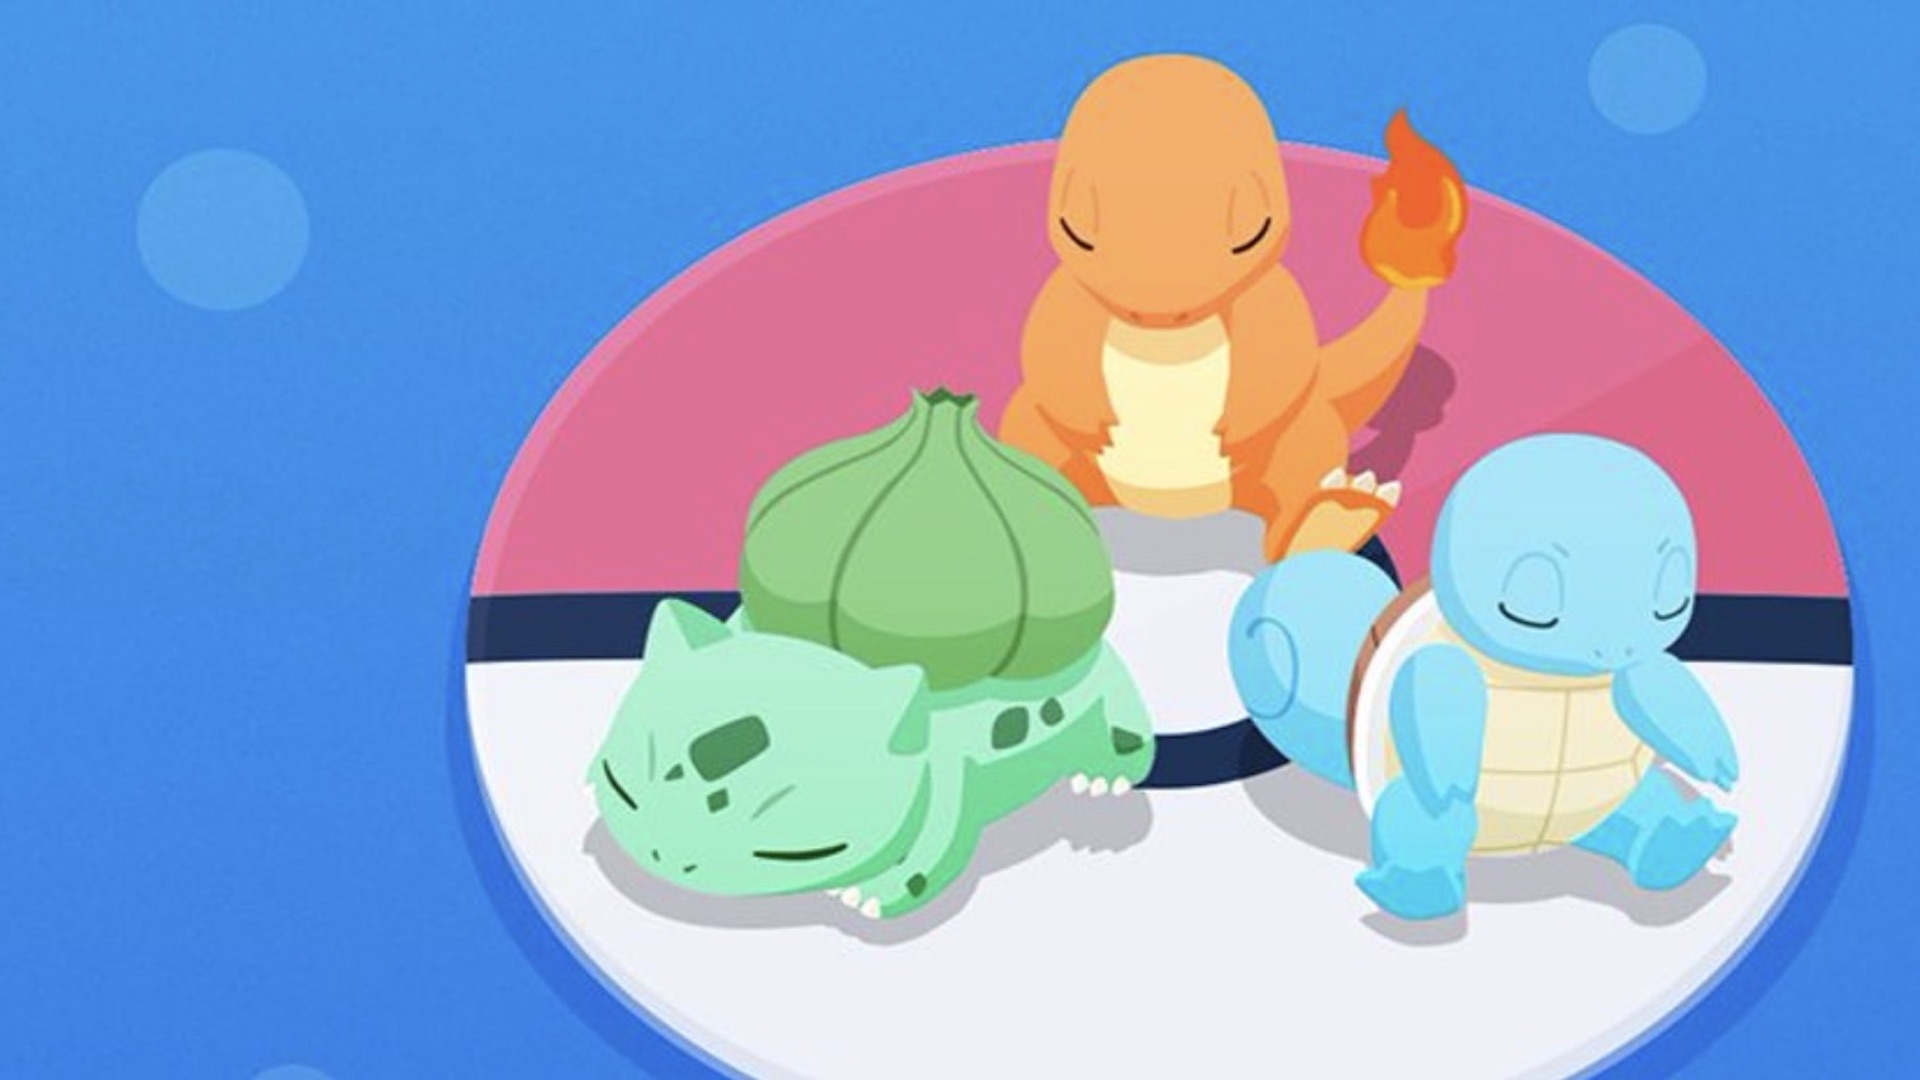 Pokemon Sleep Is A New Mobile Game That Tracks Your Sleep